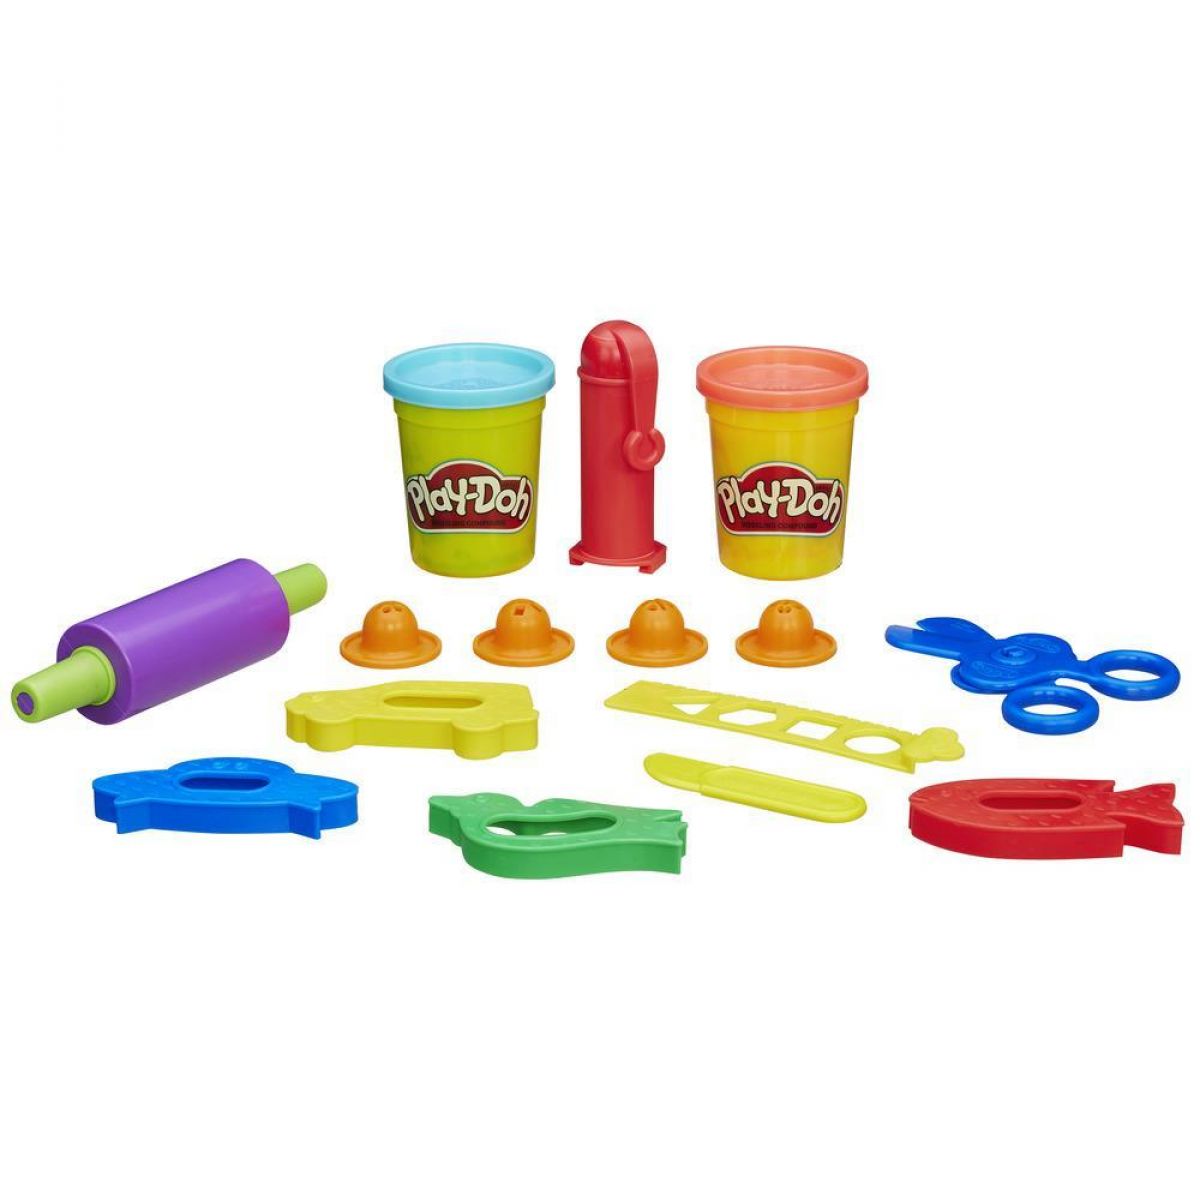 Play-Doh Sada nářadí s válečky a vykrajovátky